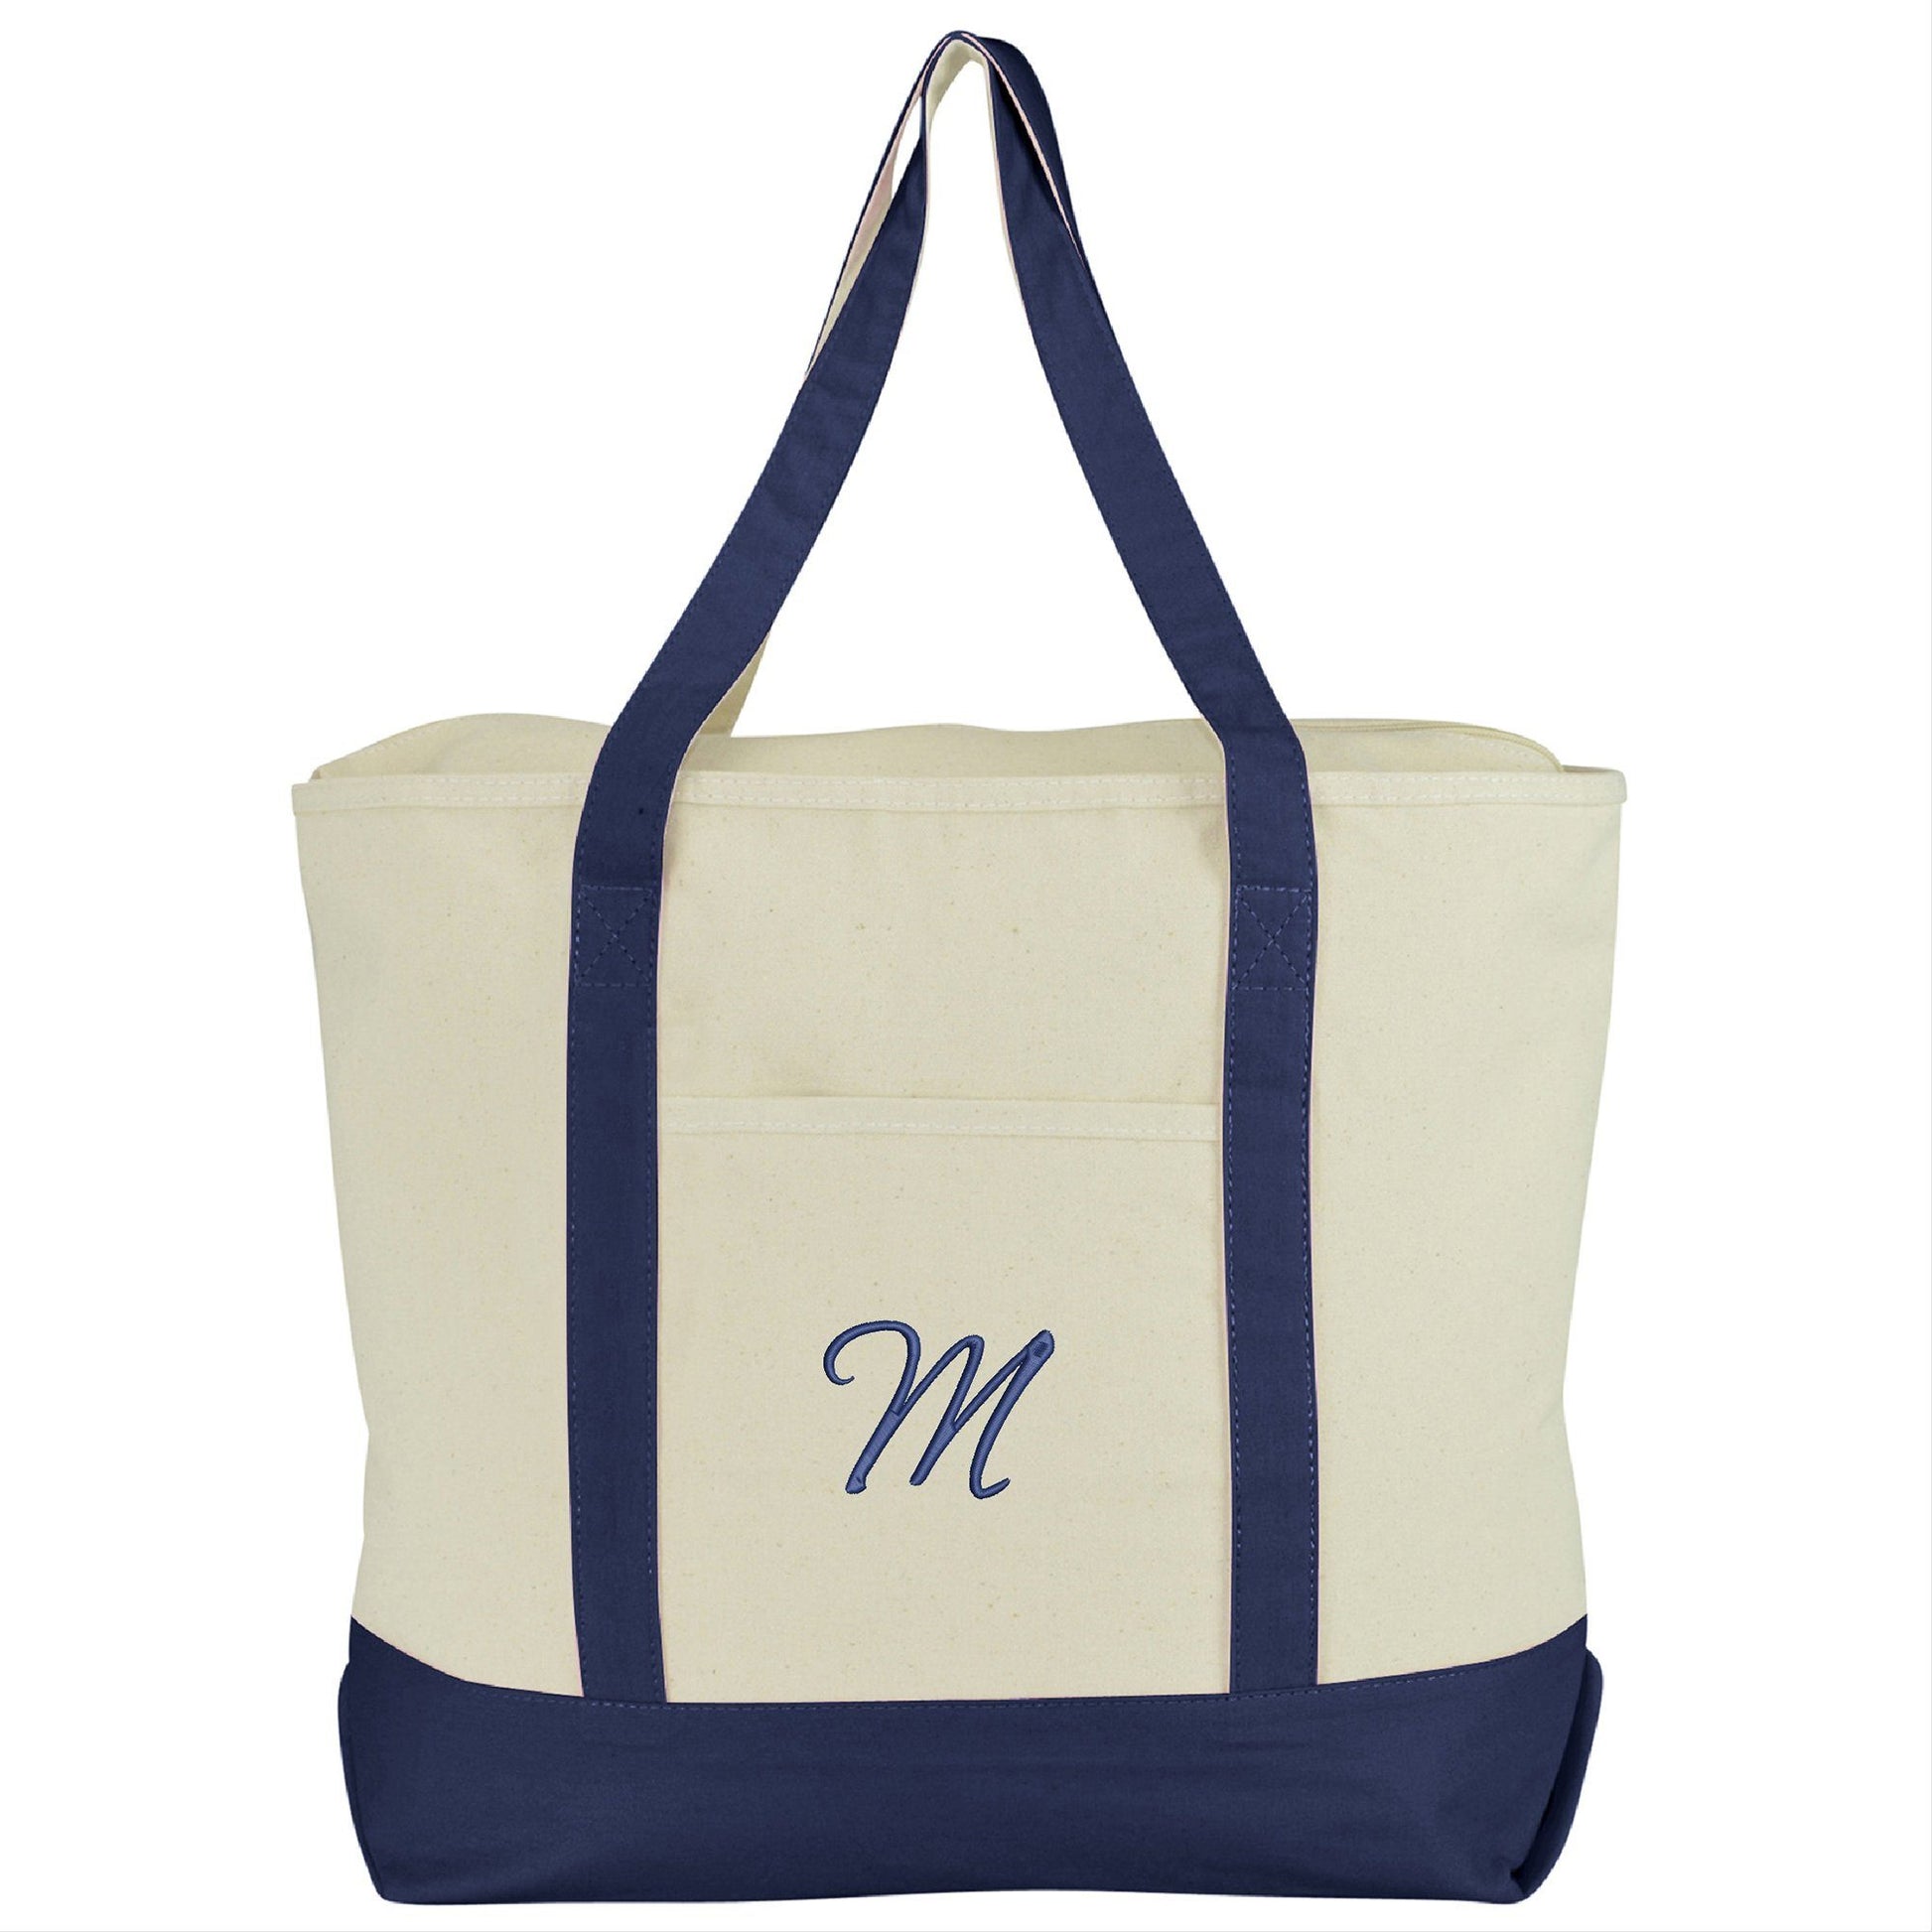 DALIX Personalized Tote Bag Monogram Navy Blue A-Z Bags DALIX M Navy Blue 